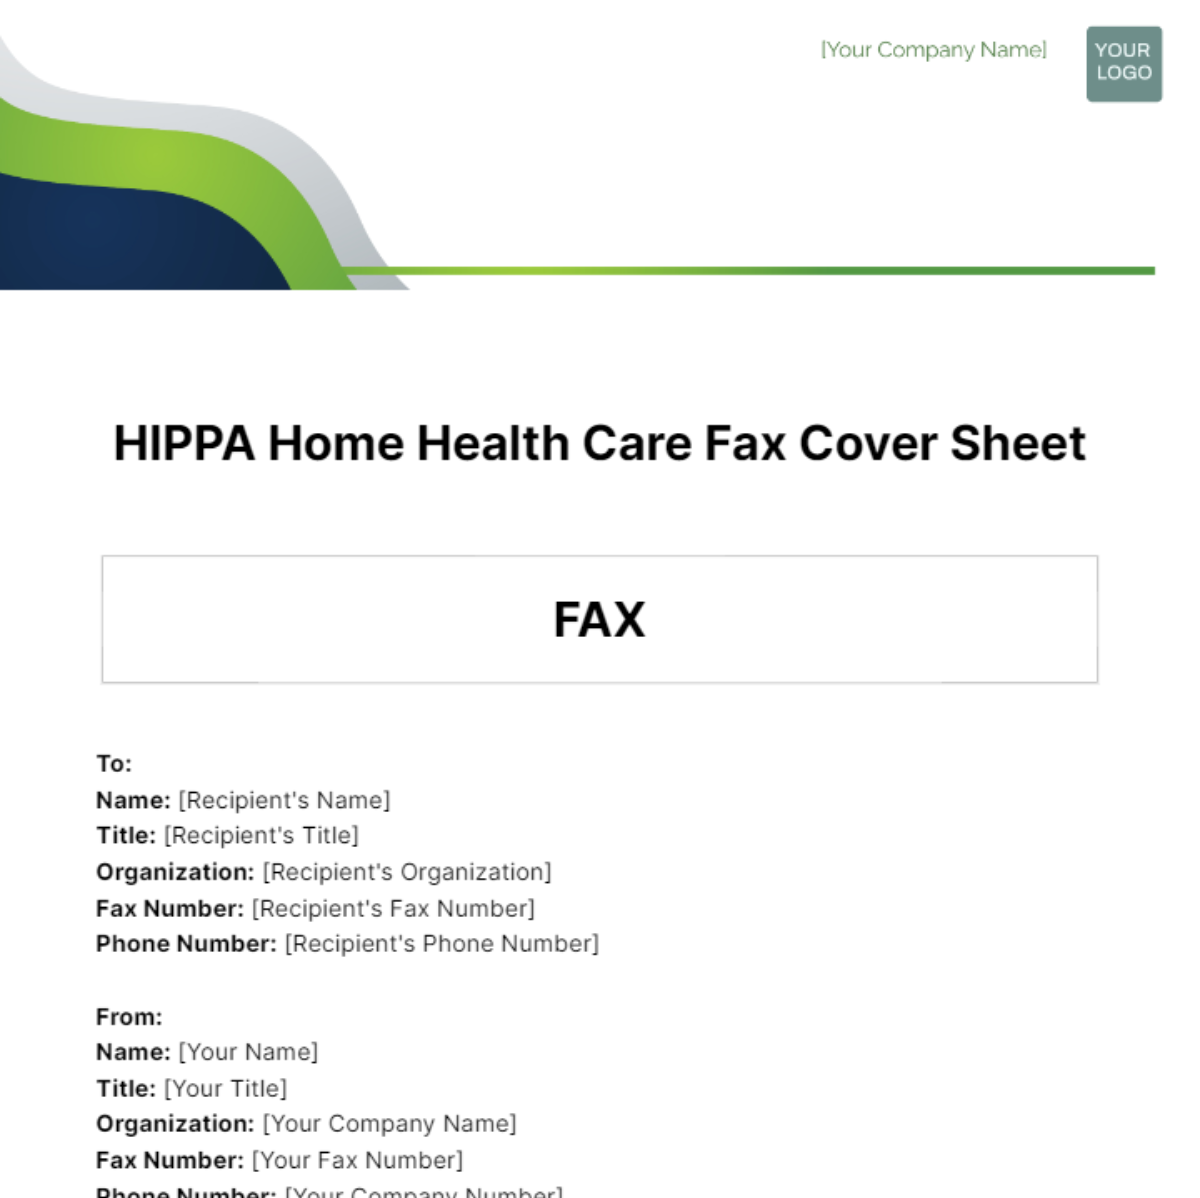 HIPPA Home Health Care Fax Cover Sheet Template